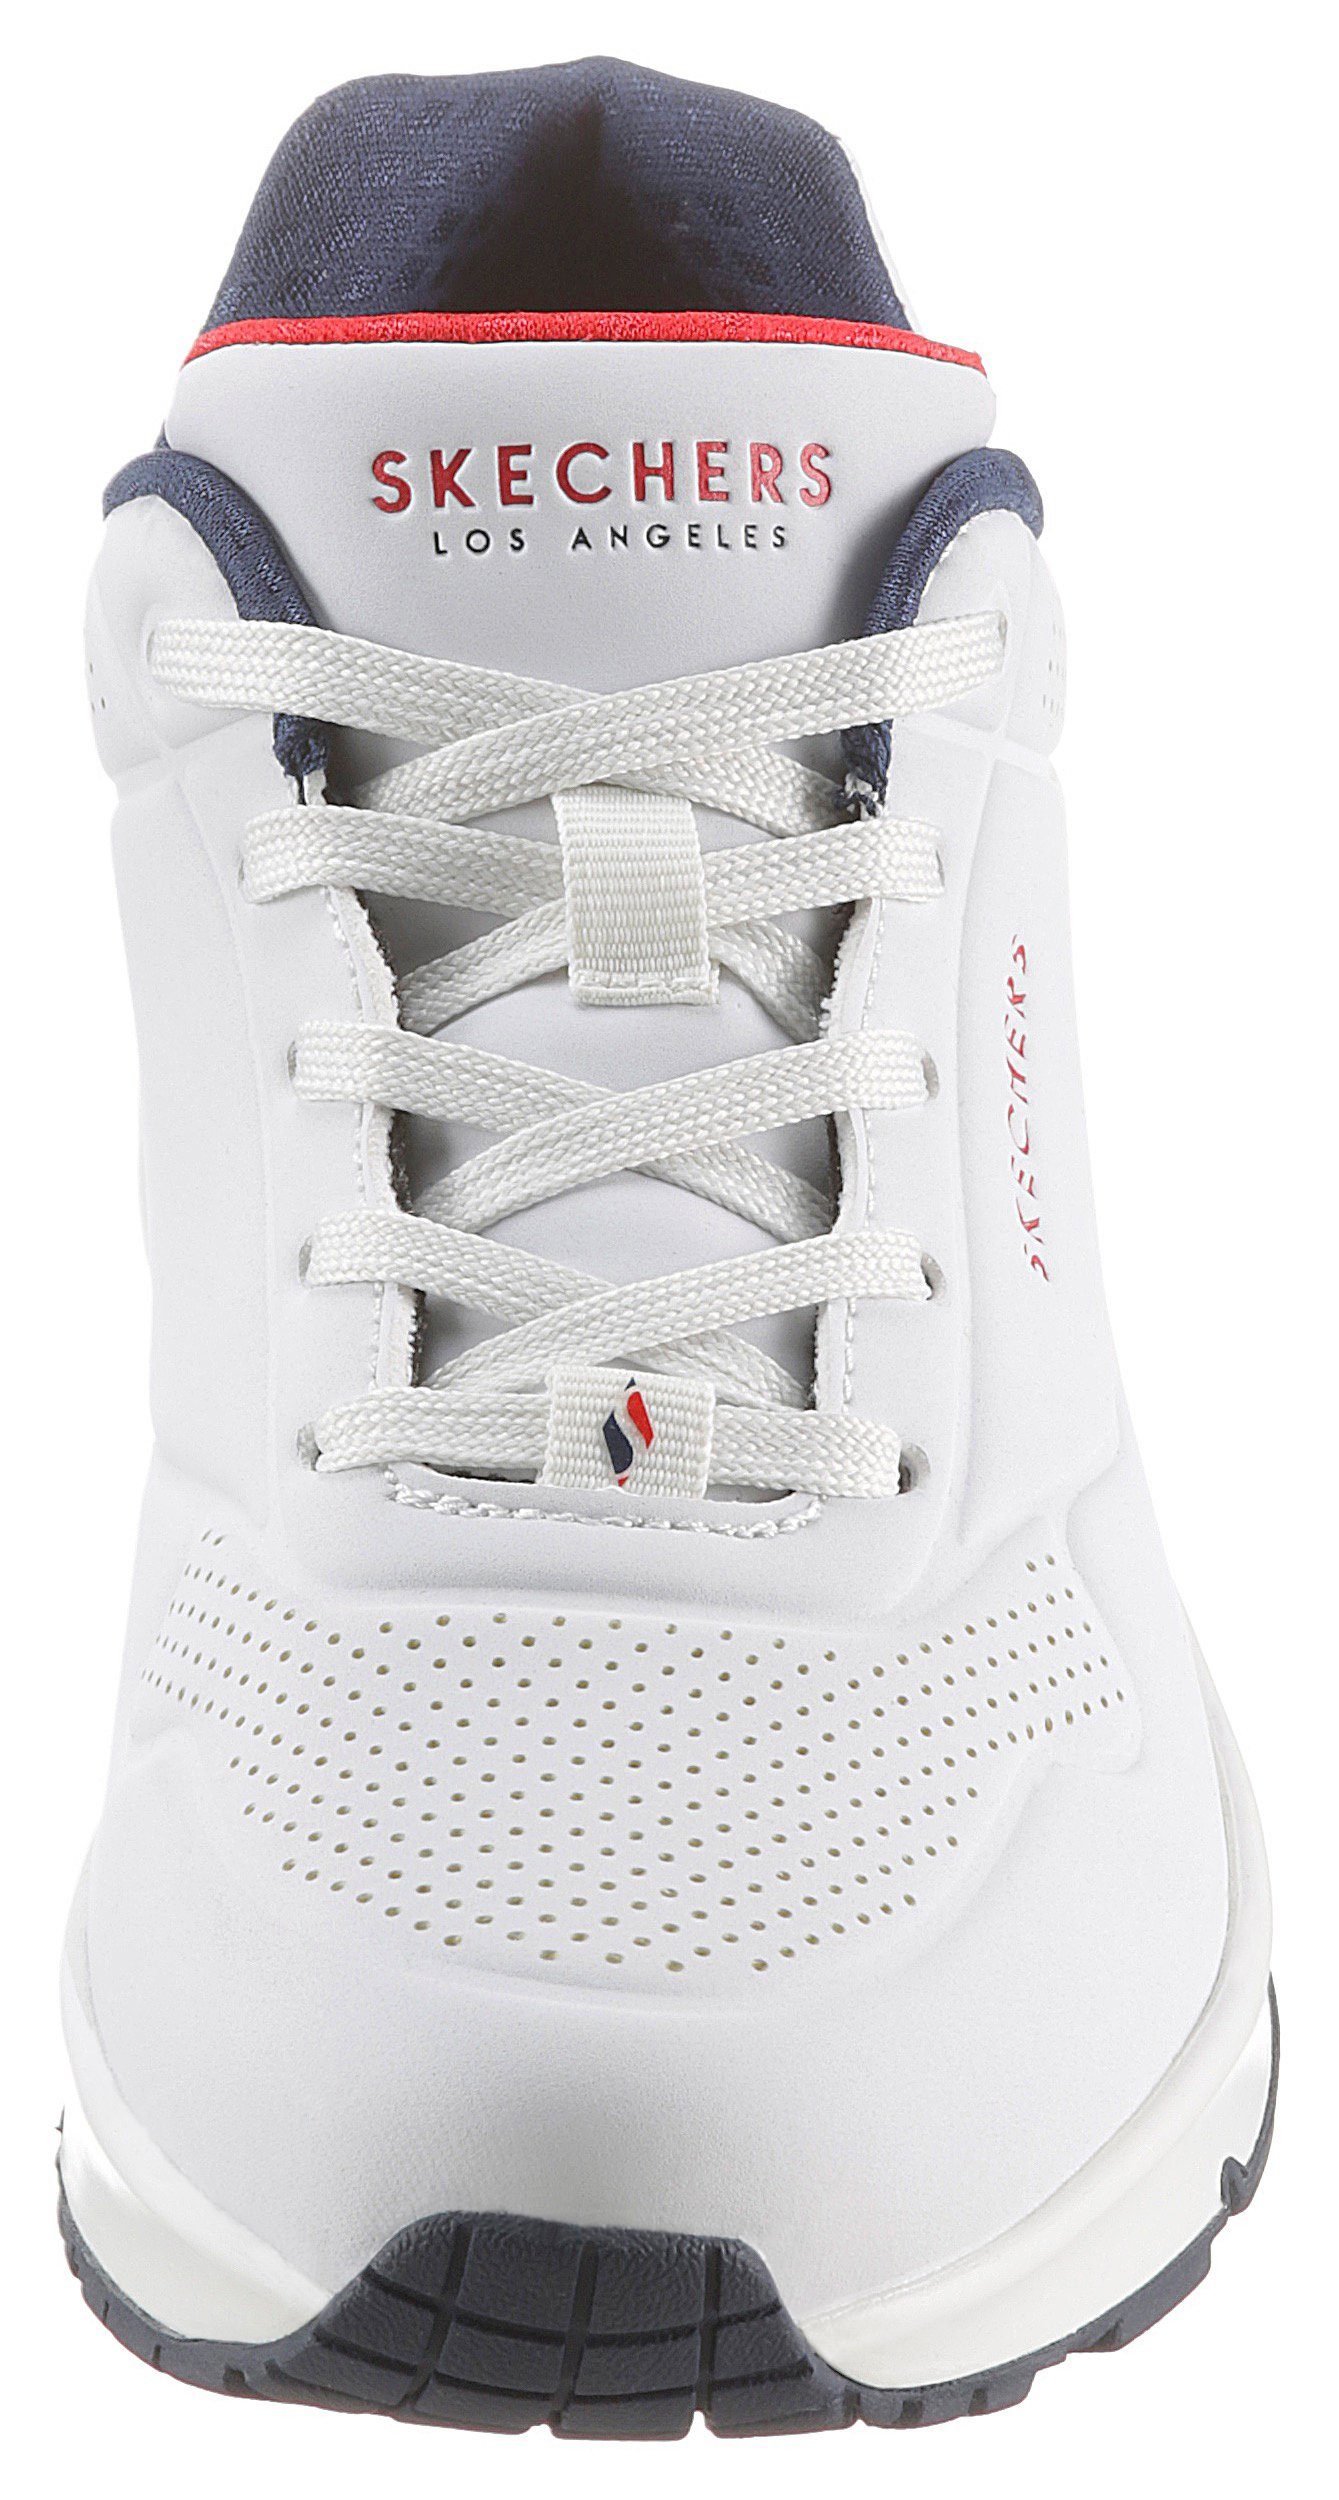 Uno Perforation mit Air feiner Skechers - Wedgesneaker white Stand on